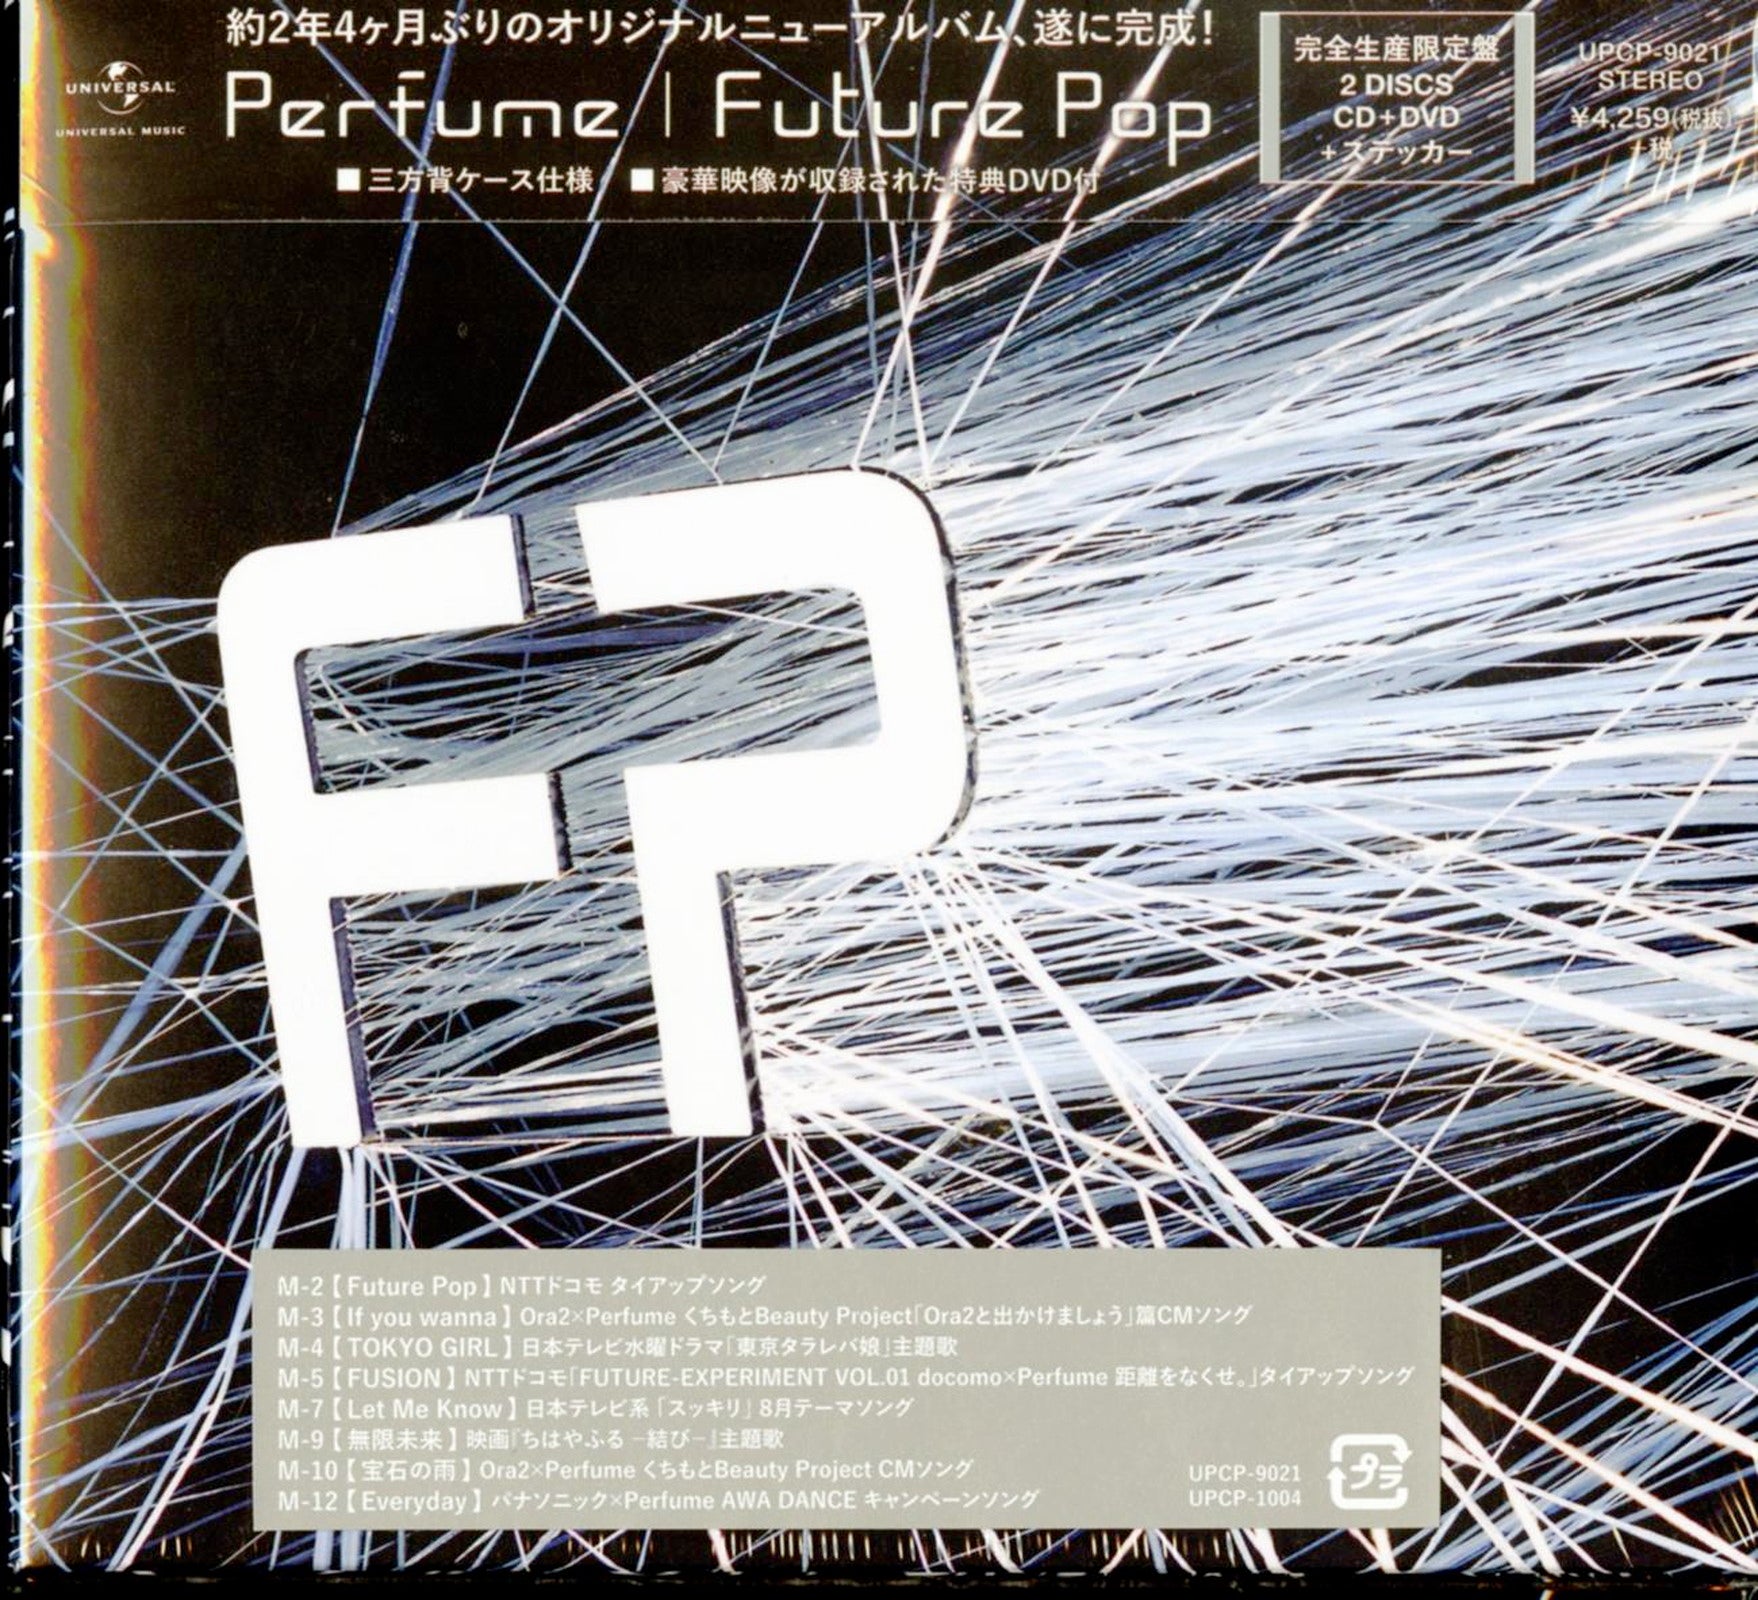 Perfume - Future Pop - Japan CD+DVD Limited Edition – CDs Vinyl